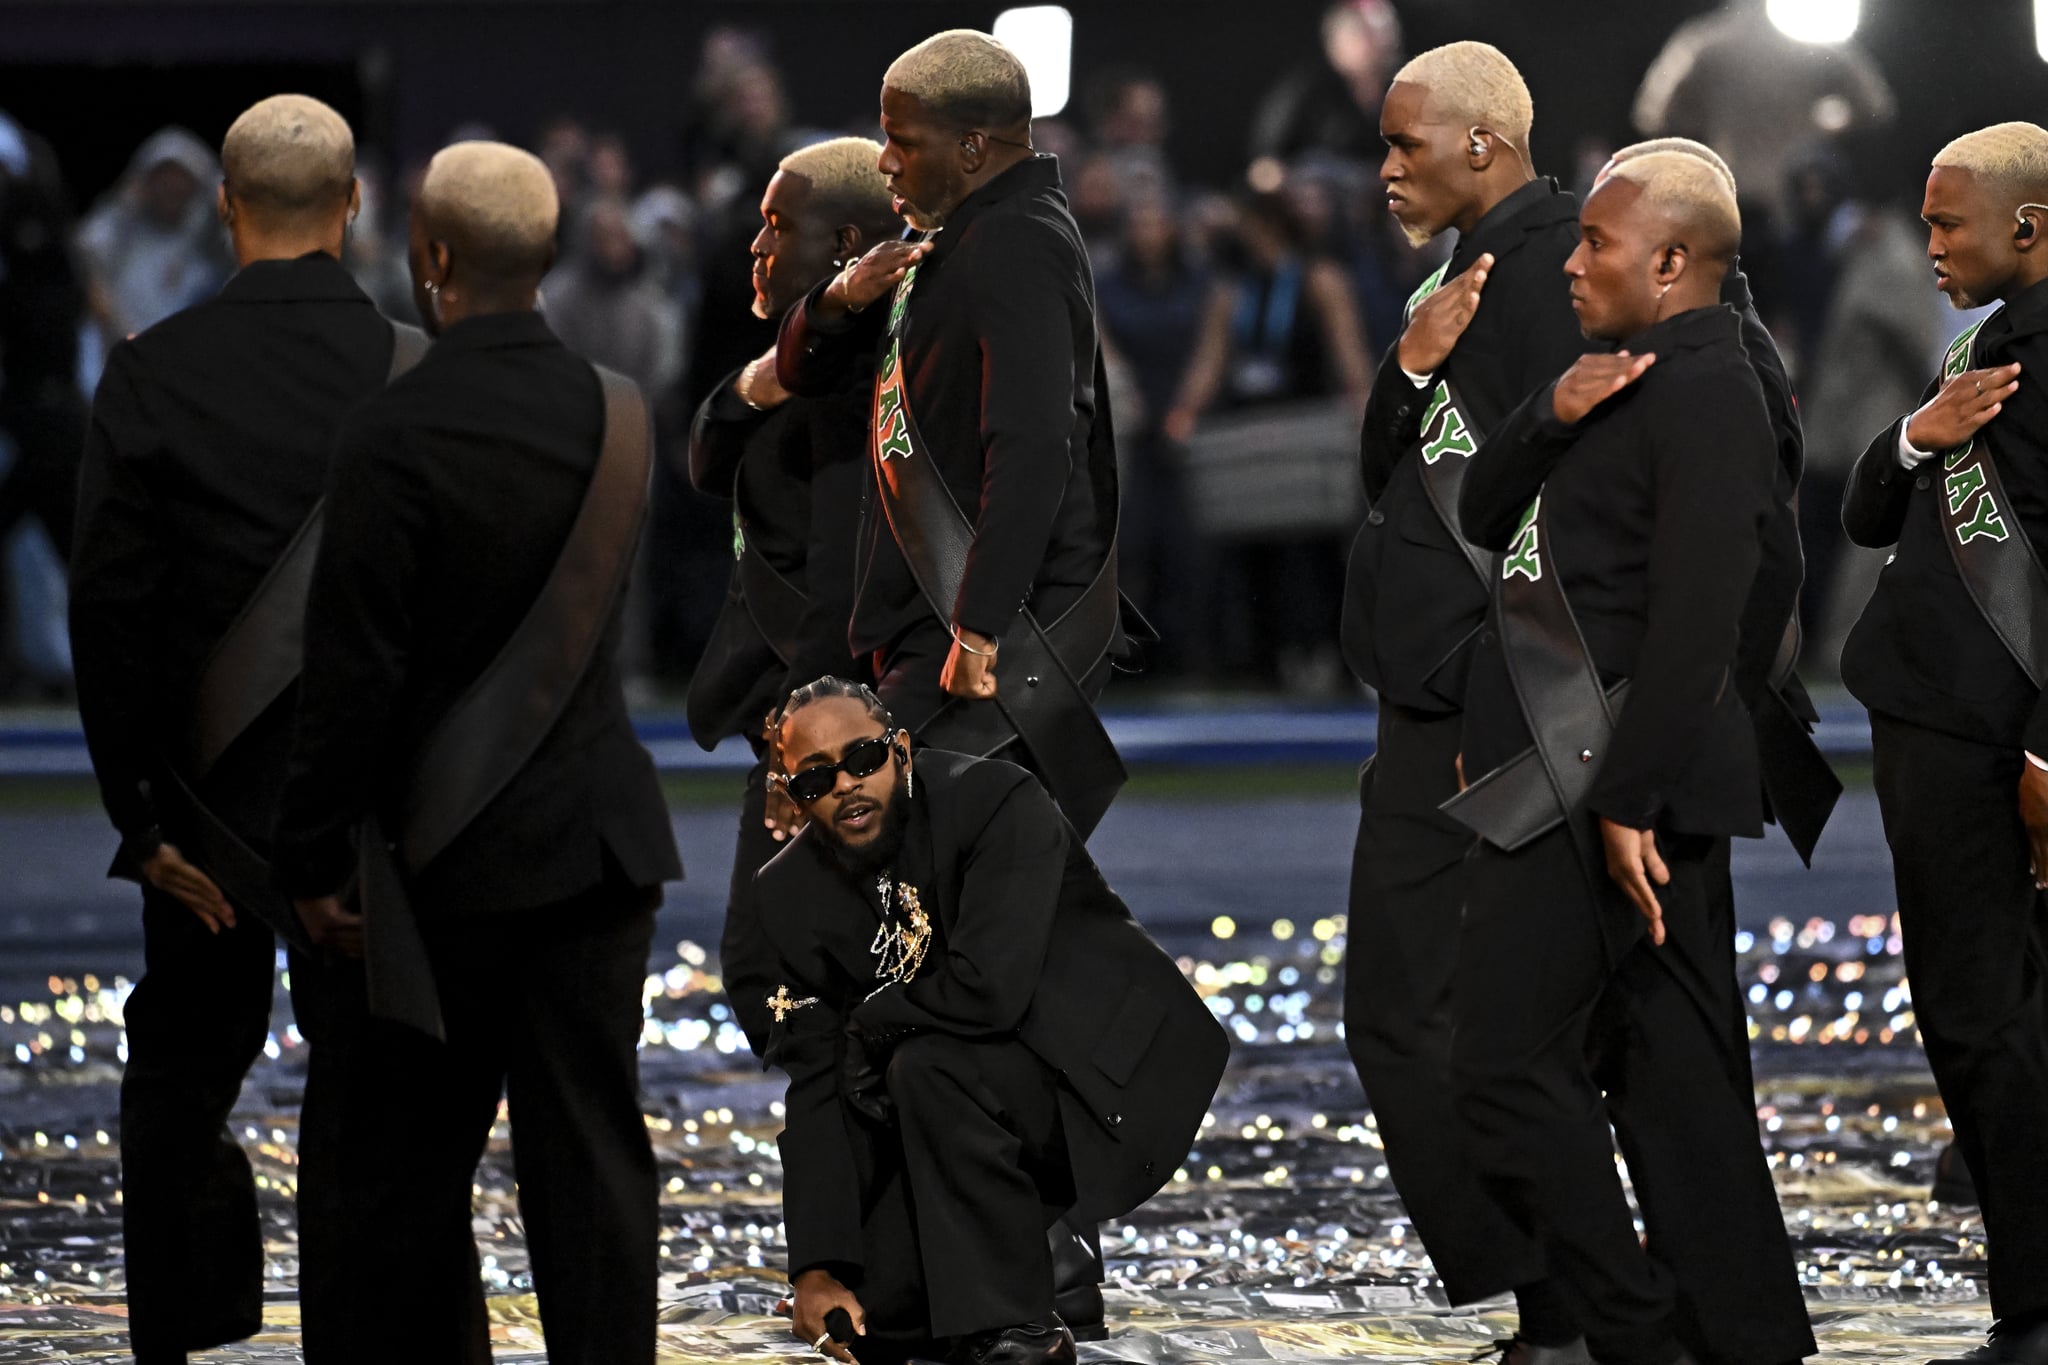 Is Kendrick Lamar's Super Bowl Outfit a Janet Jackson Tribute